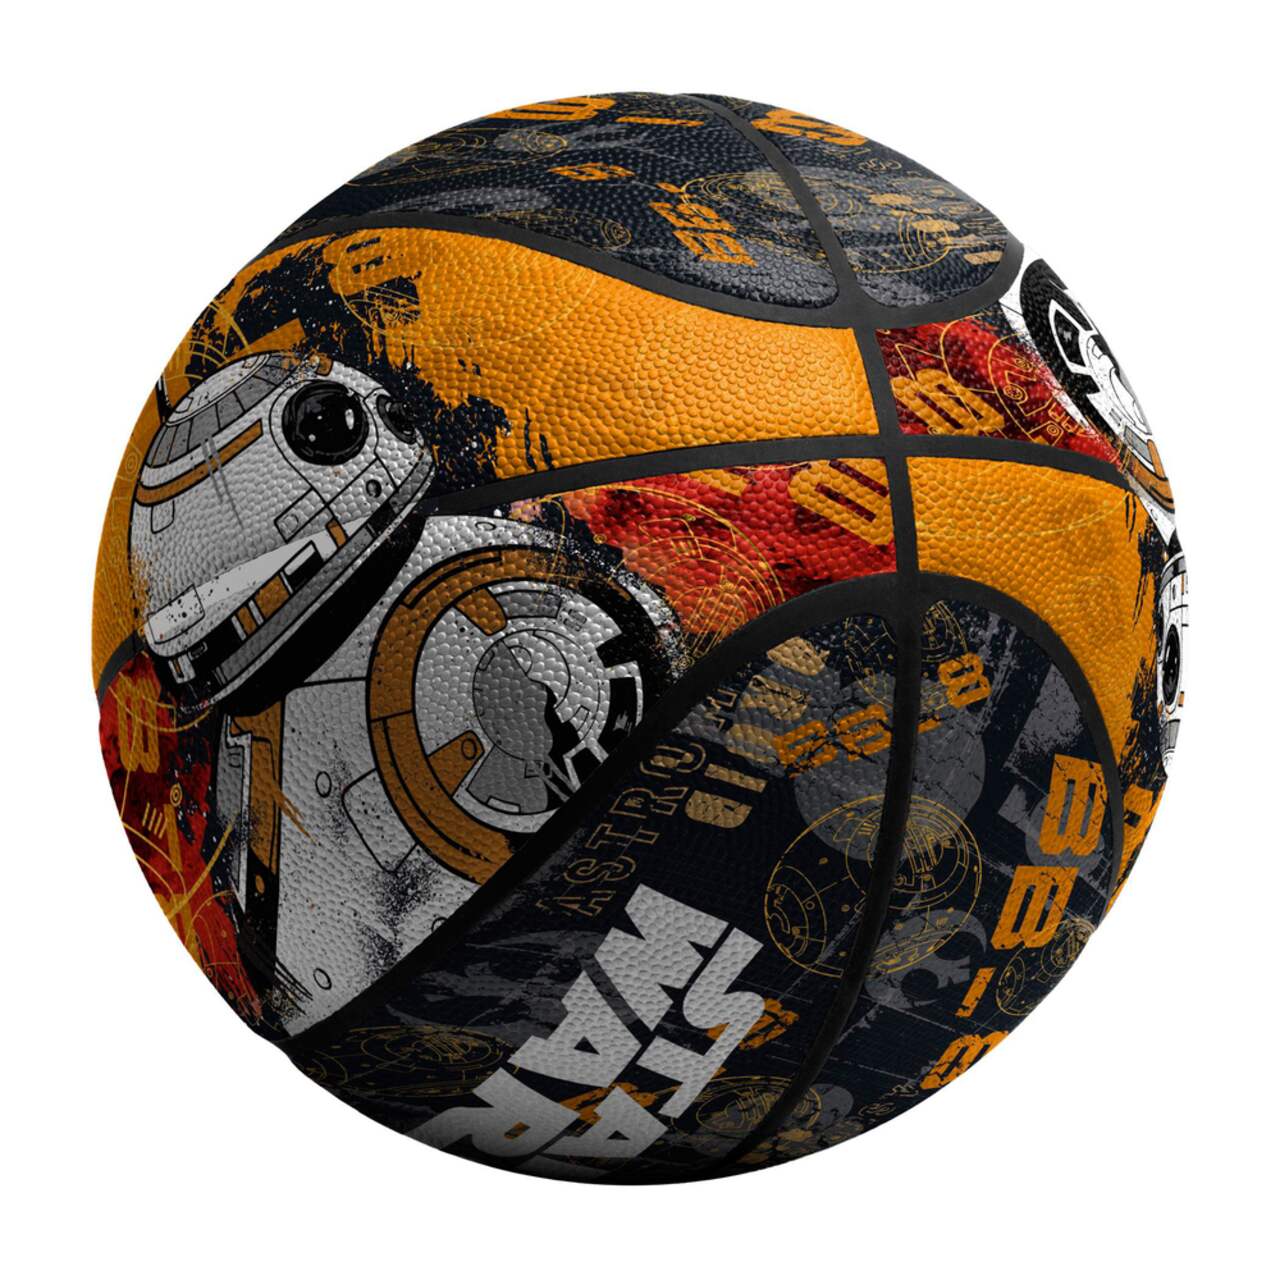 Ballon de basketball intérieur/extérieur Star Wars BB-8, taille 5